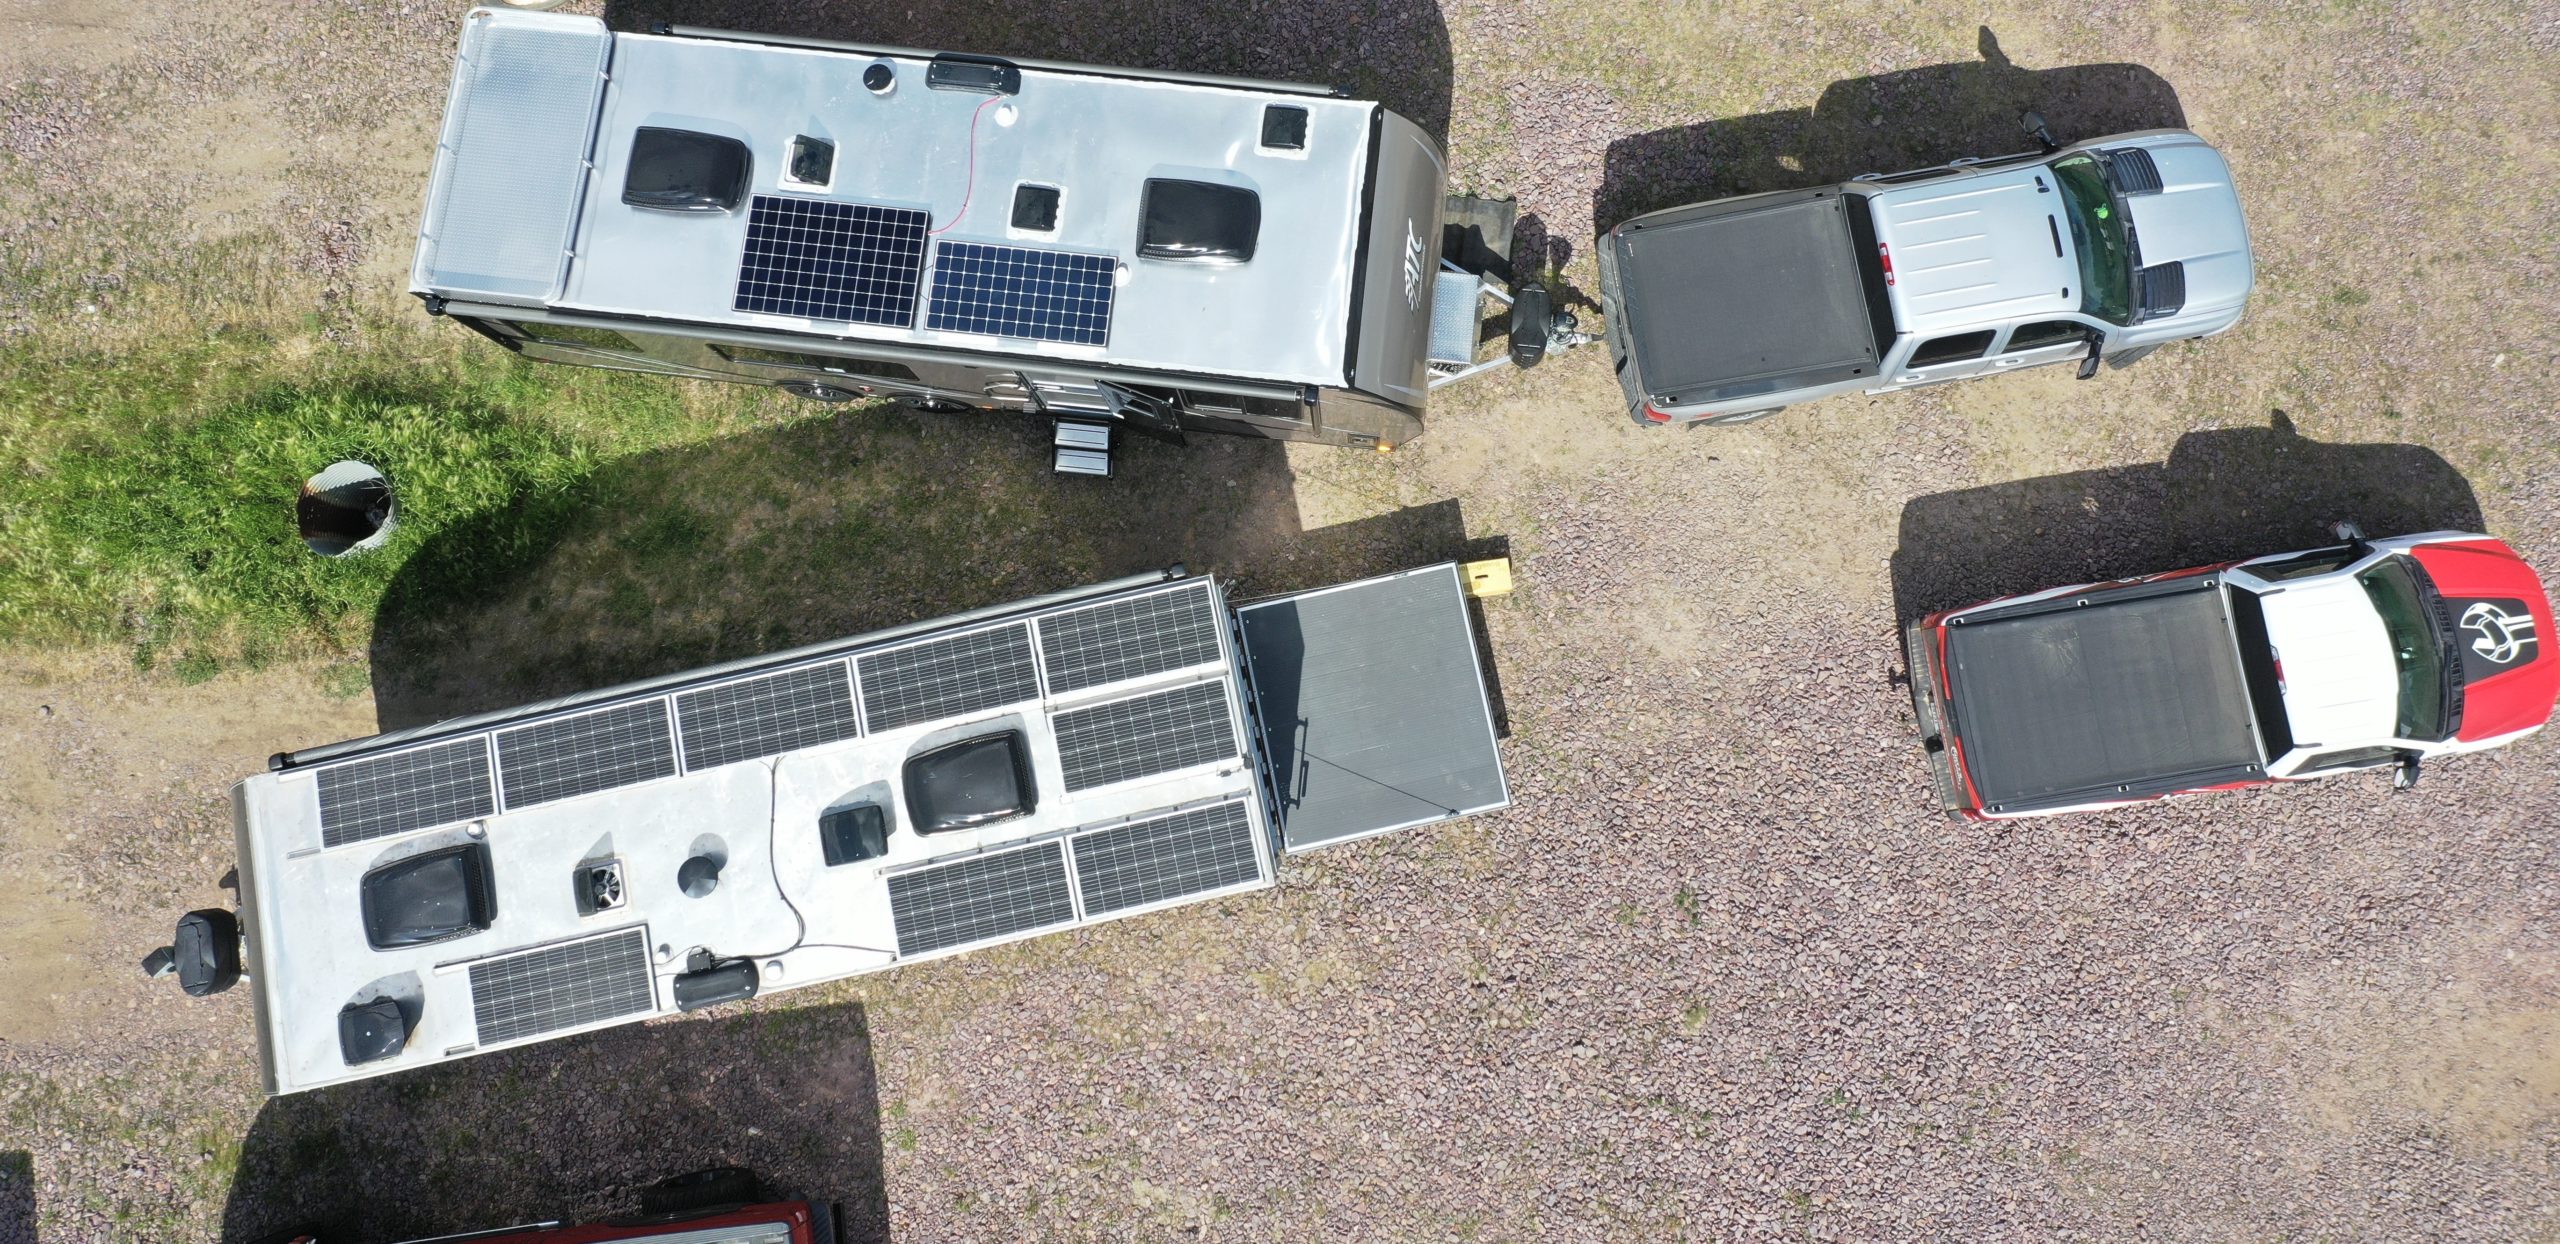 610 Watt Solar Panel Install with Cargo Rack